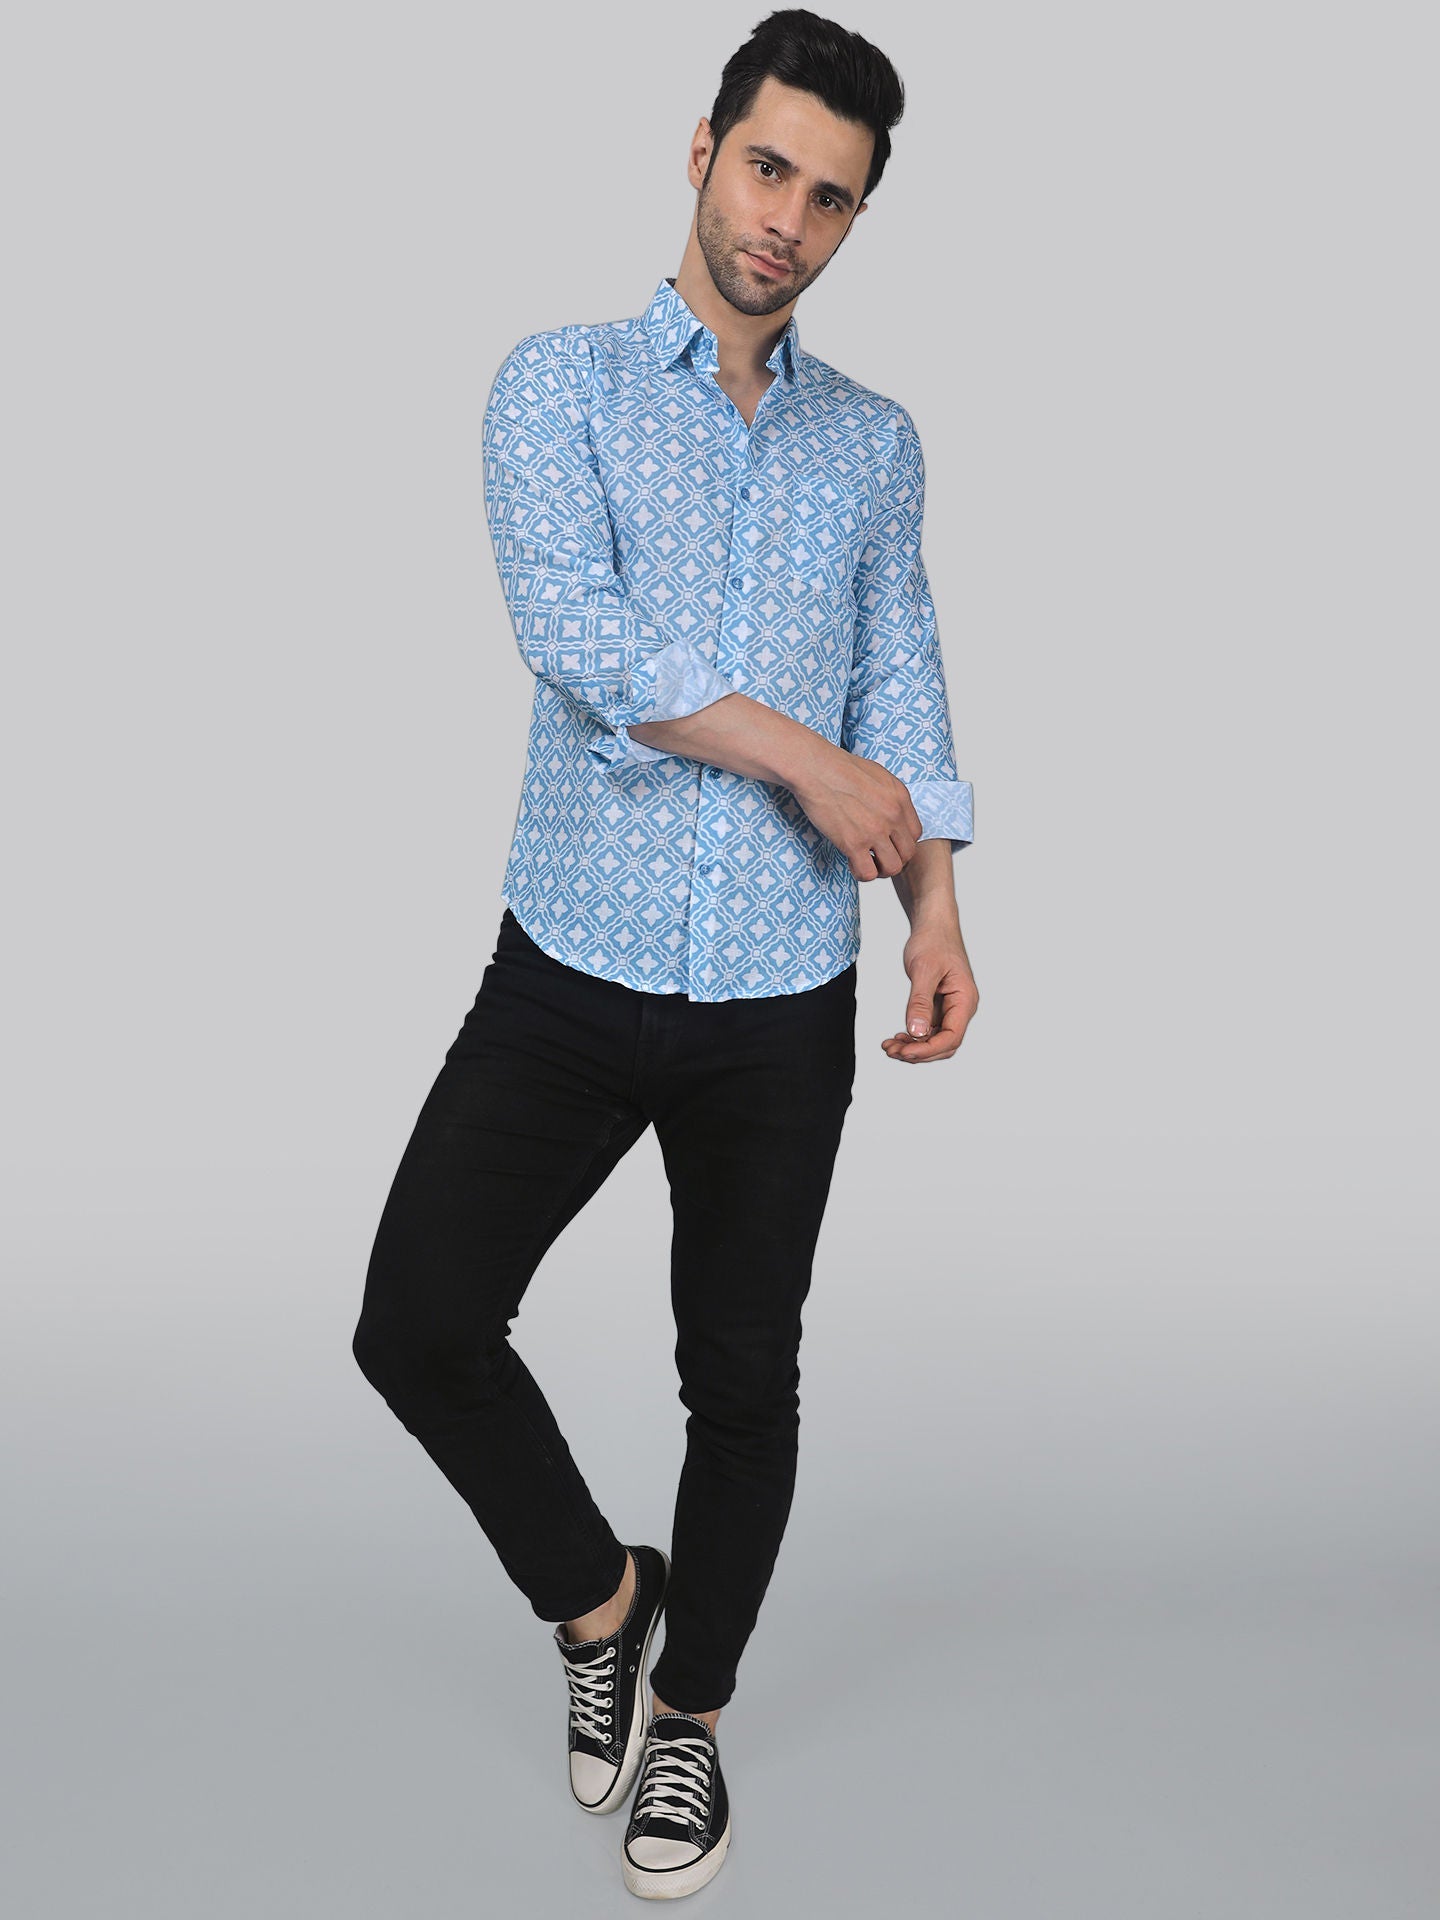 Glam-urban Men's Printed Full Sleeve Casual Linen Shirt - TryBuy® USA🇺🇸